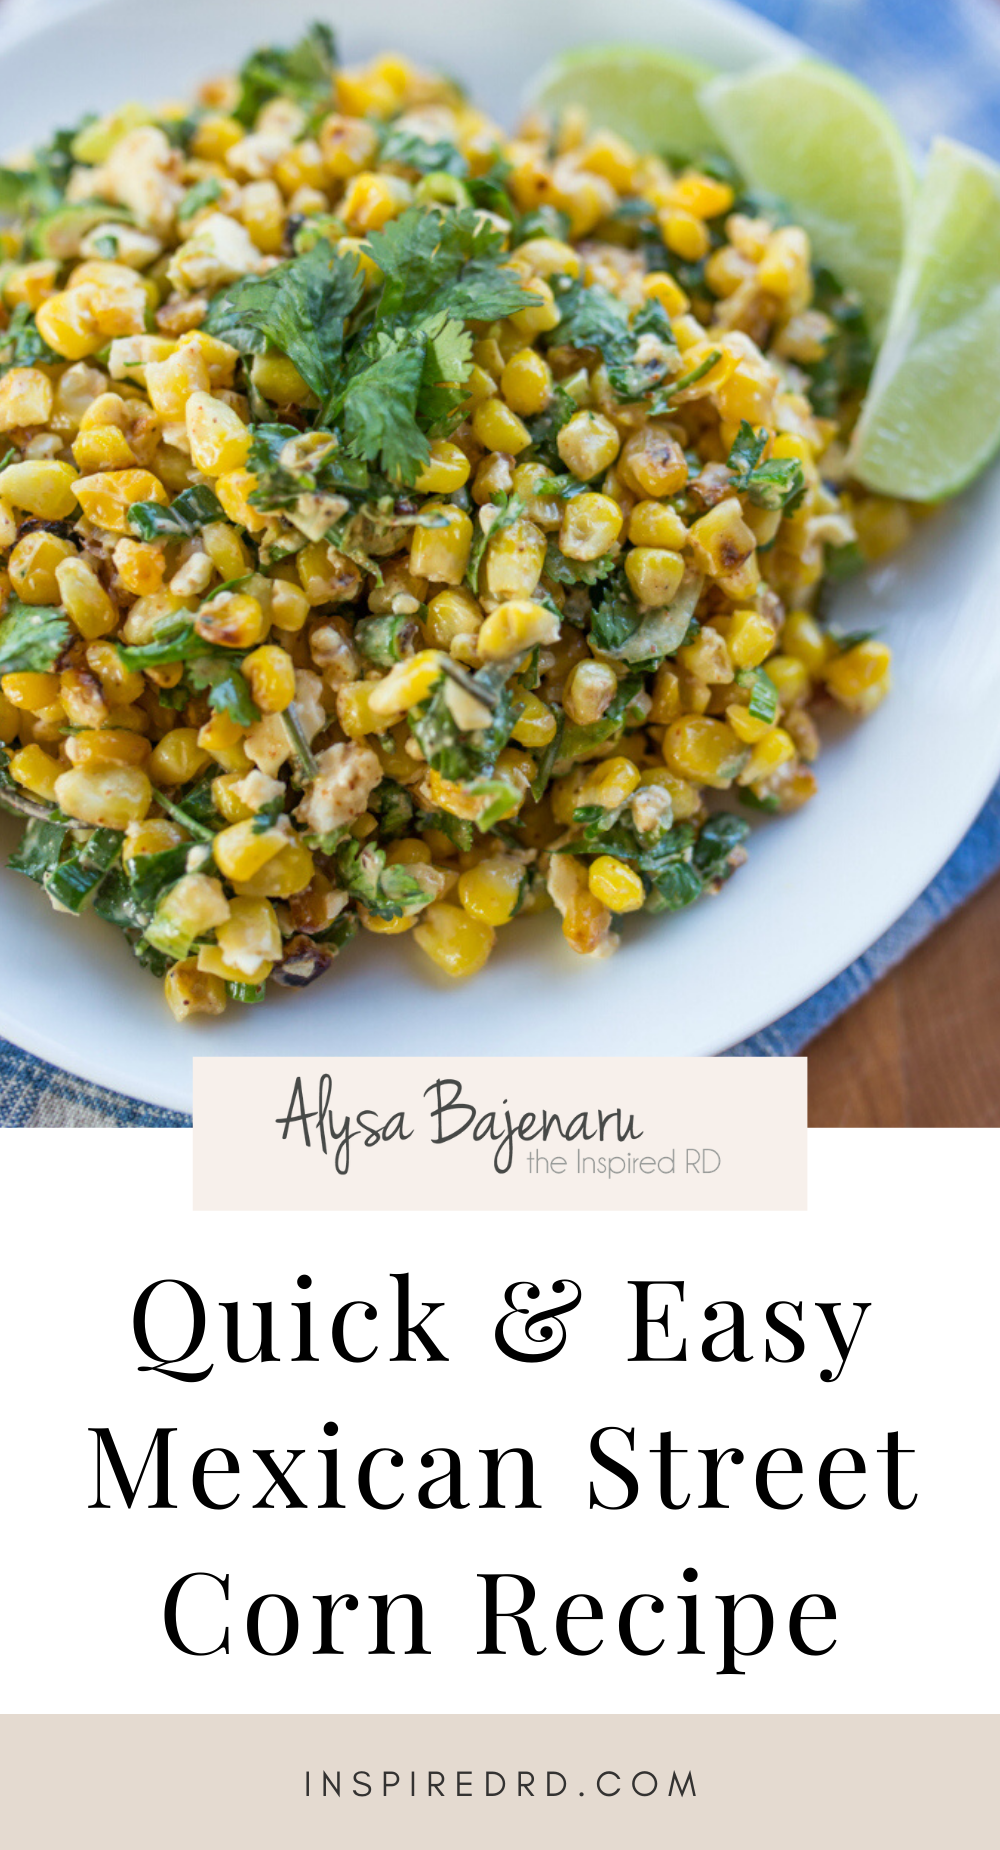 Quick & Easy Mexican Street Corn Recipe